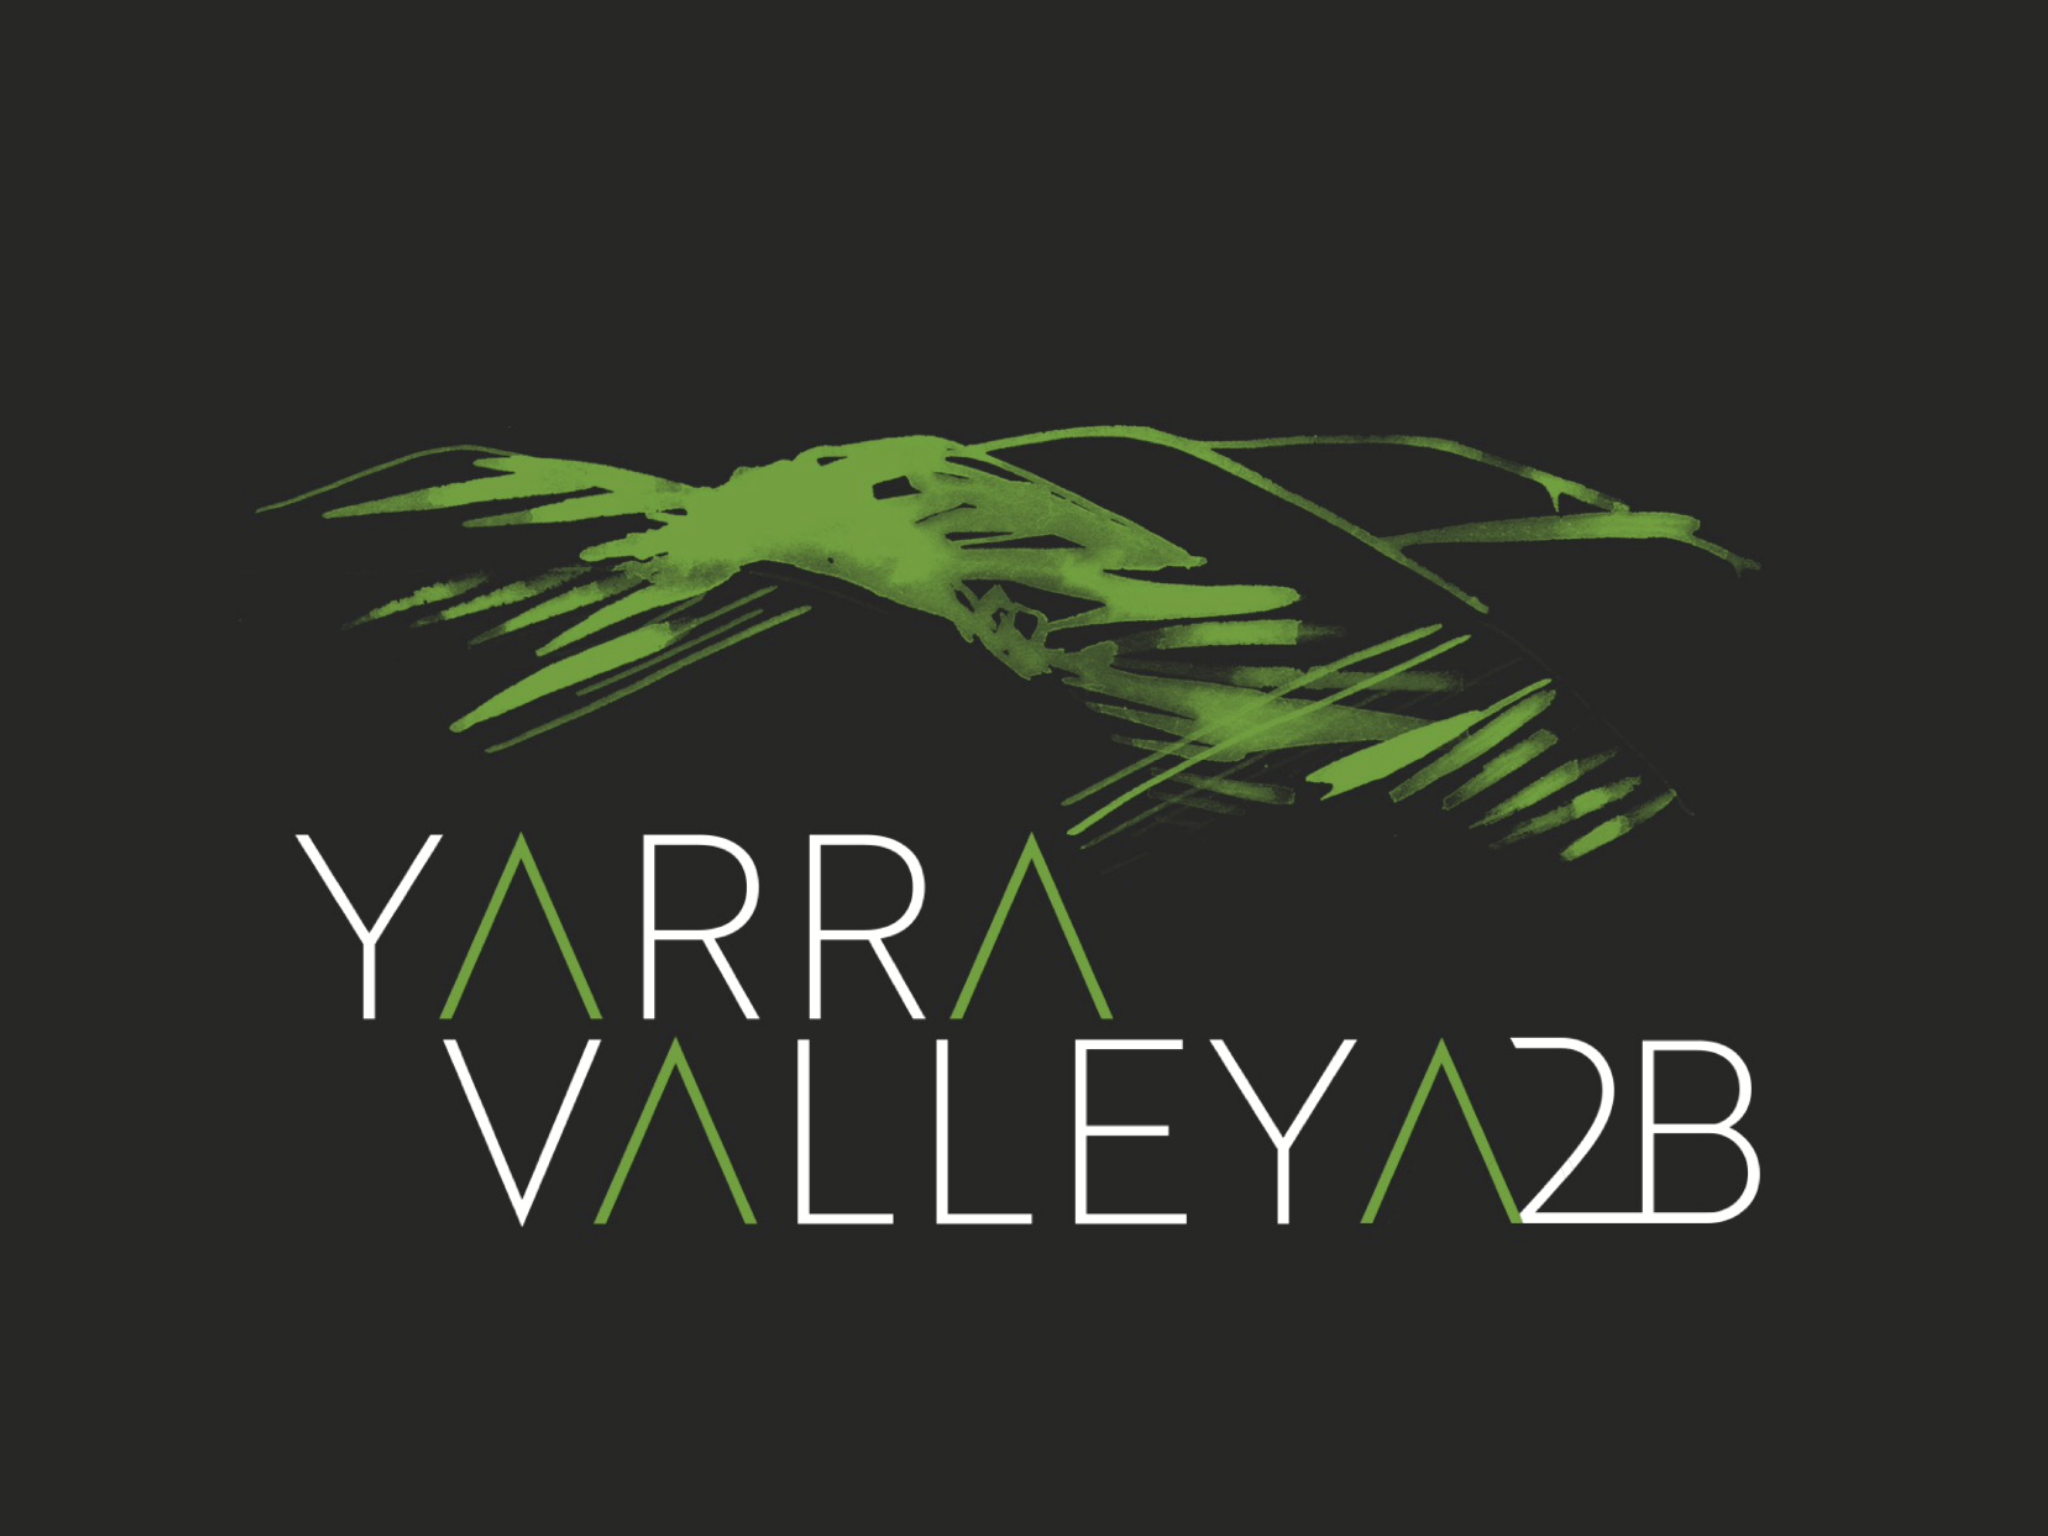 Yarra Valley A2B logo.PNG